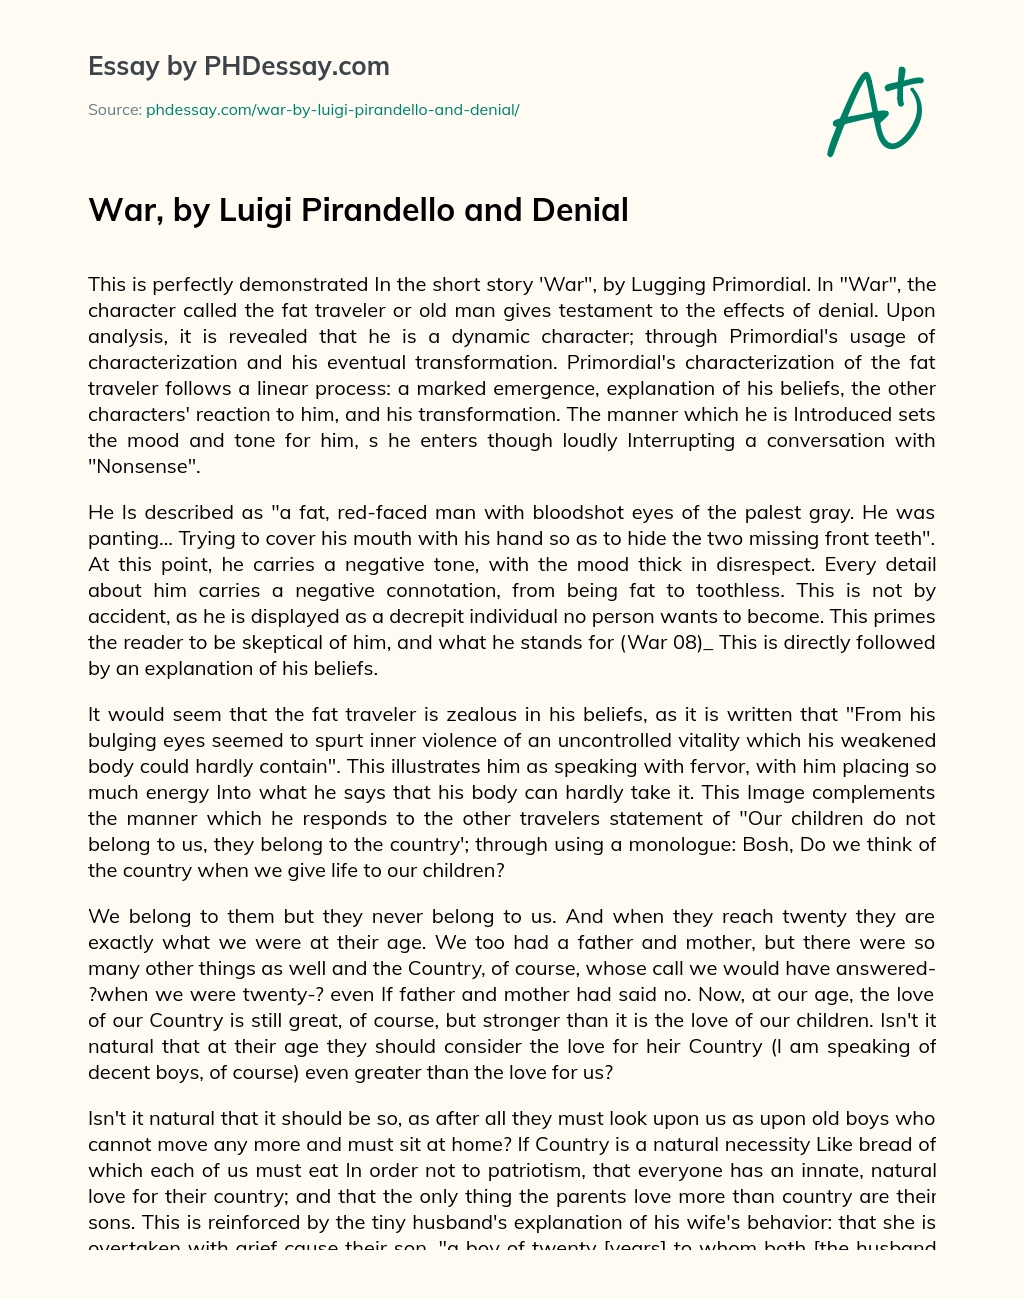 War, by Luigi Pirandello and Denial essay